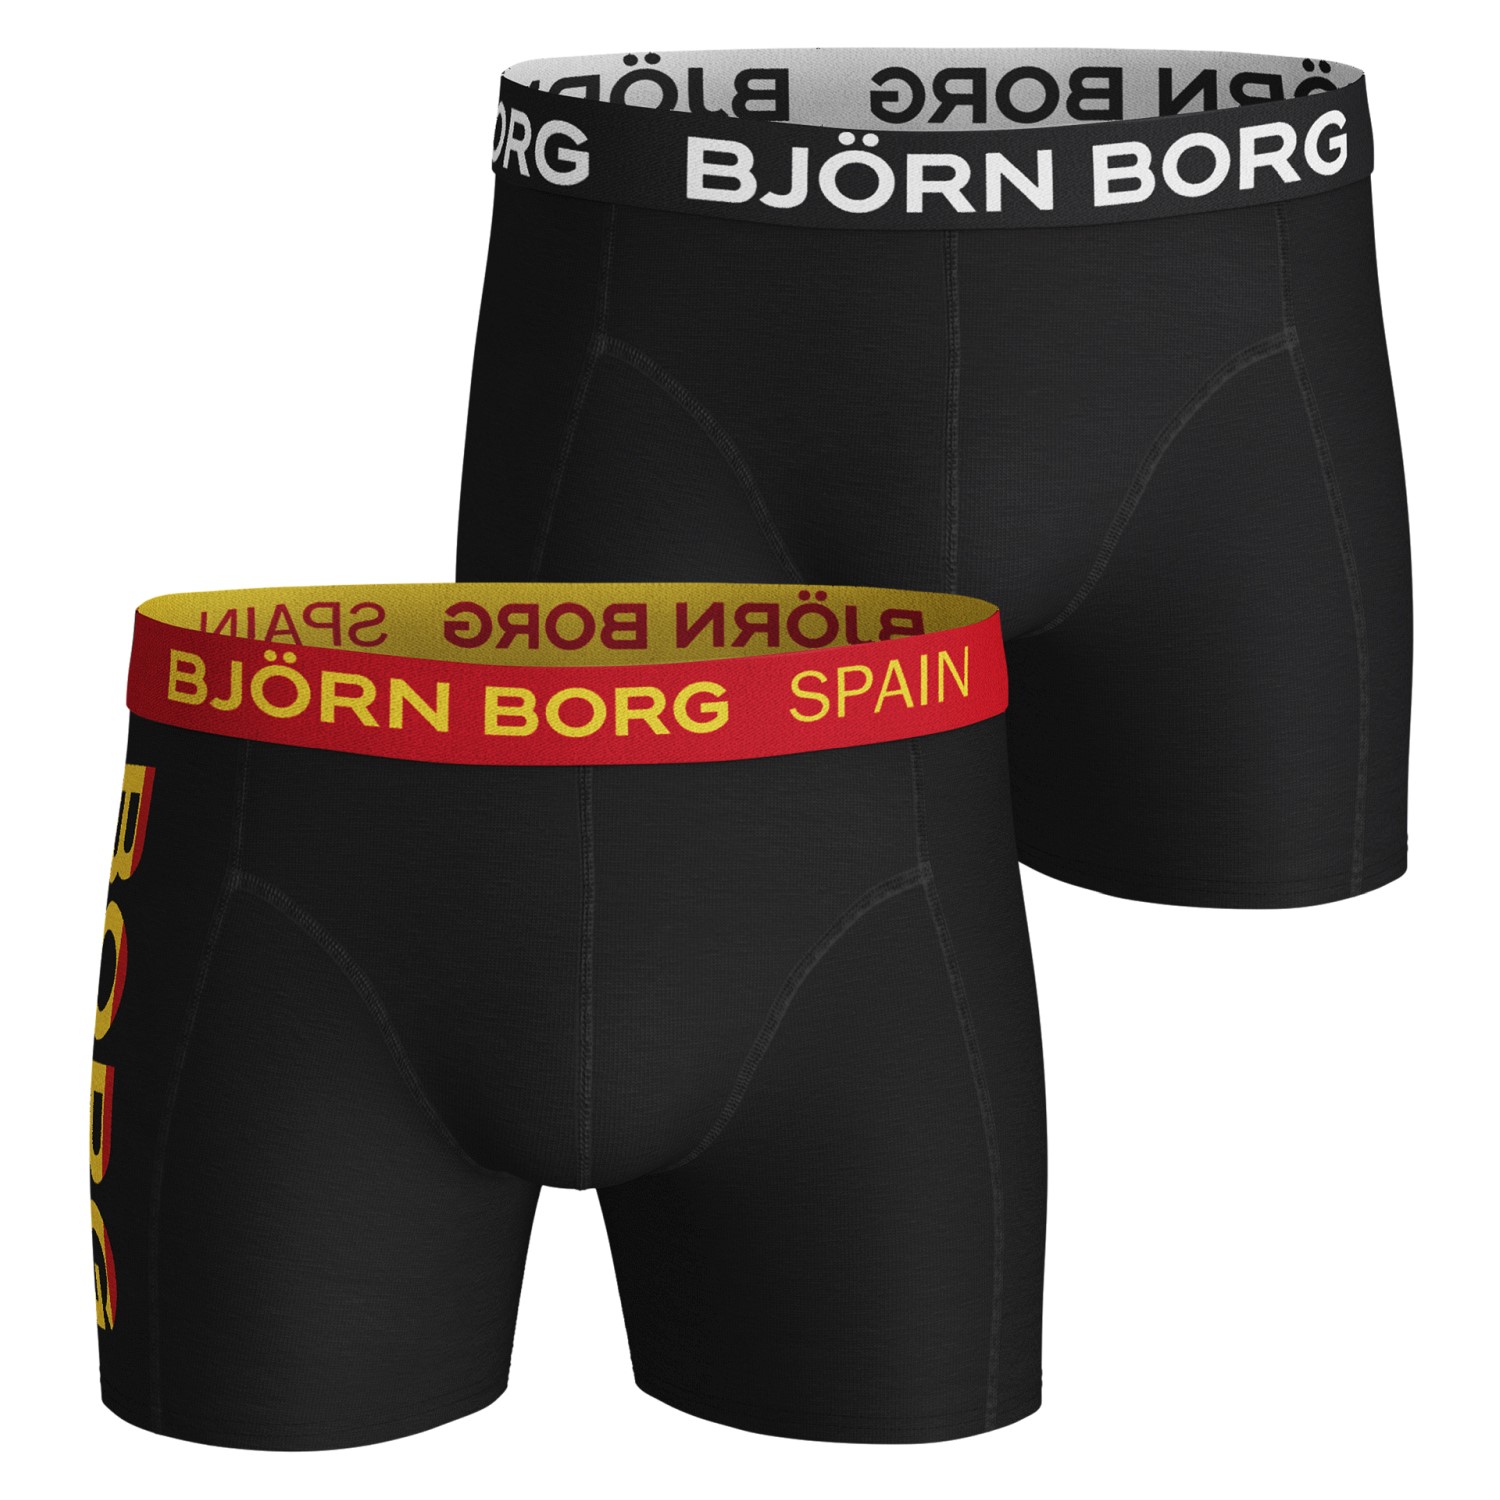 Björn Borg Nations Cotton Stretch Shorts Spain